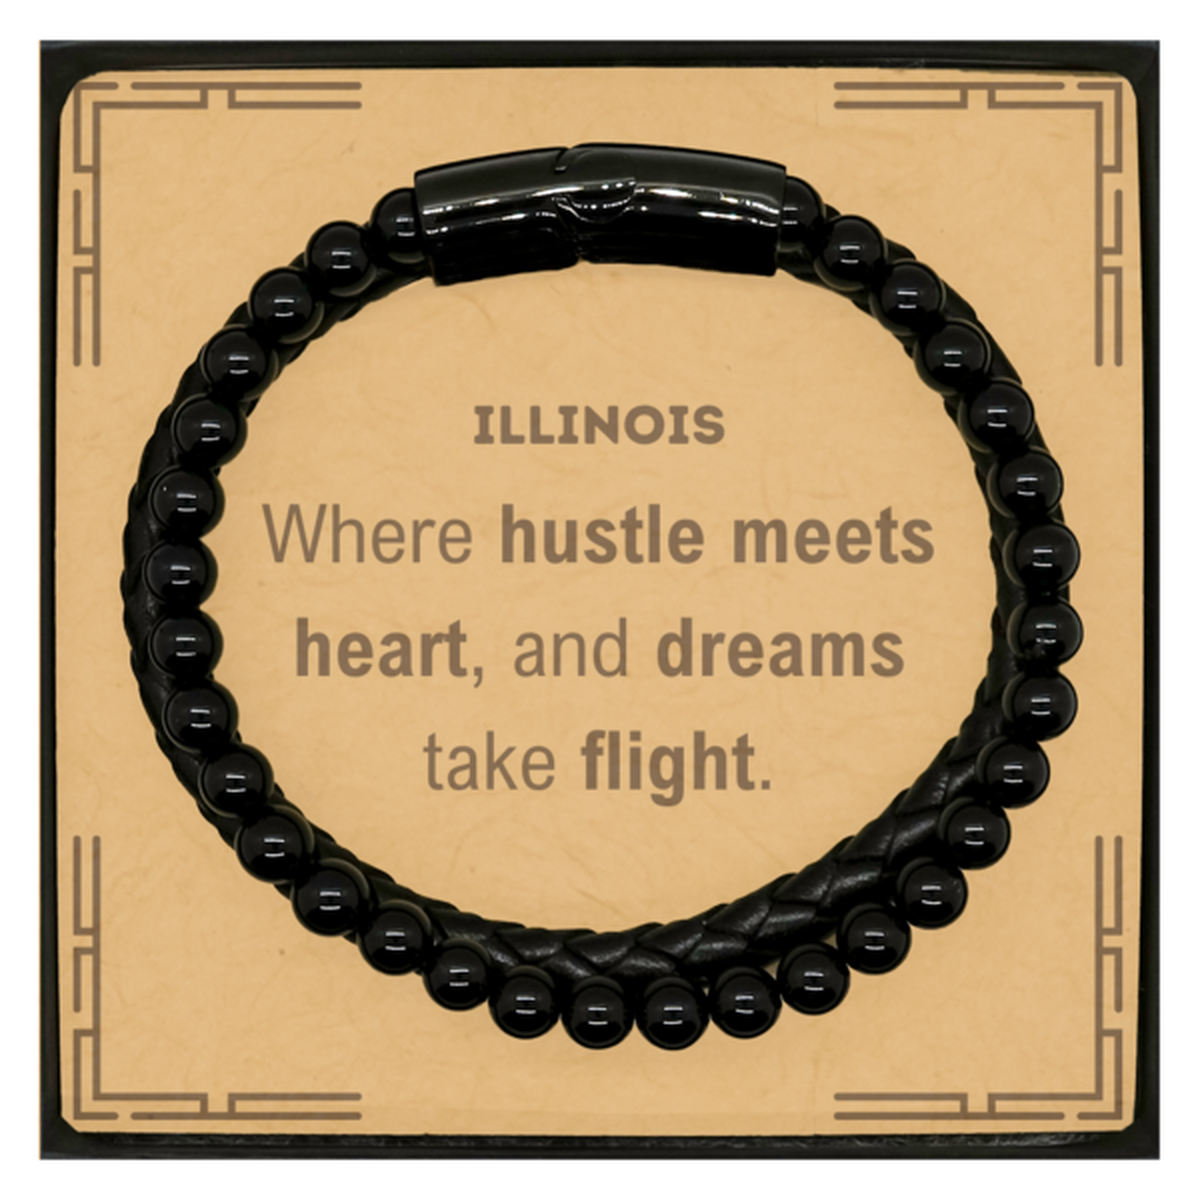 Illinois: Where hustle meets heart, and dreams take flight, Illinois Card Gifts, Proud Illinois Christmas Birthday Illinois Stone Leather Bracelets, Illinois State People, Men, Women, Friends